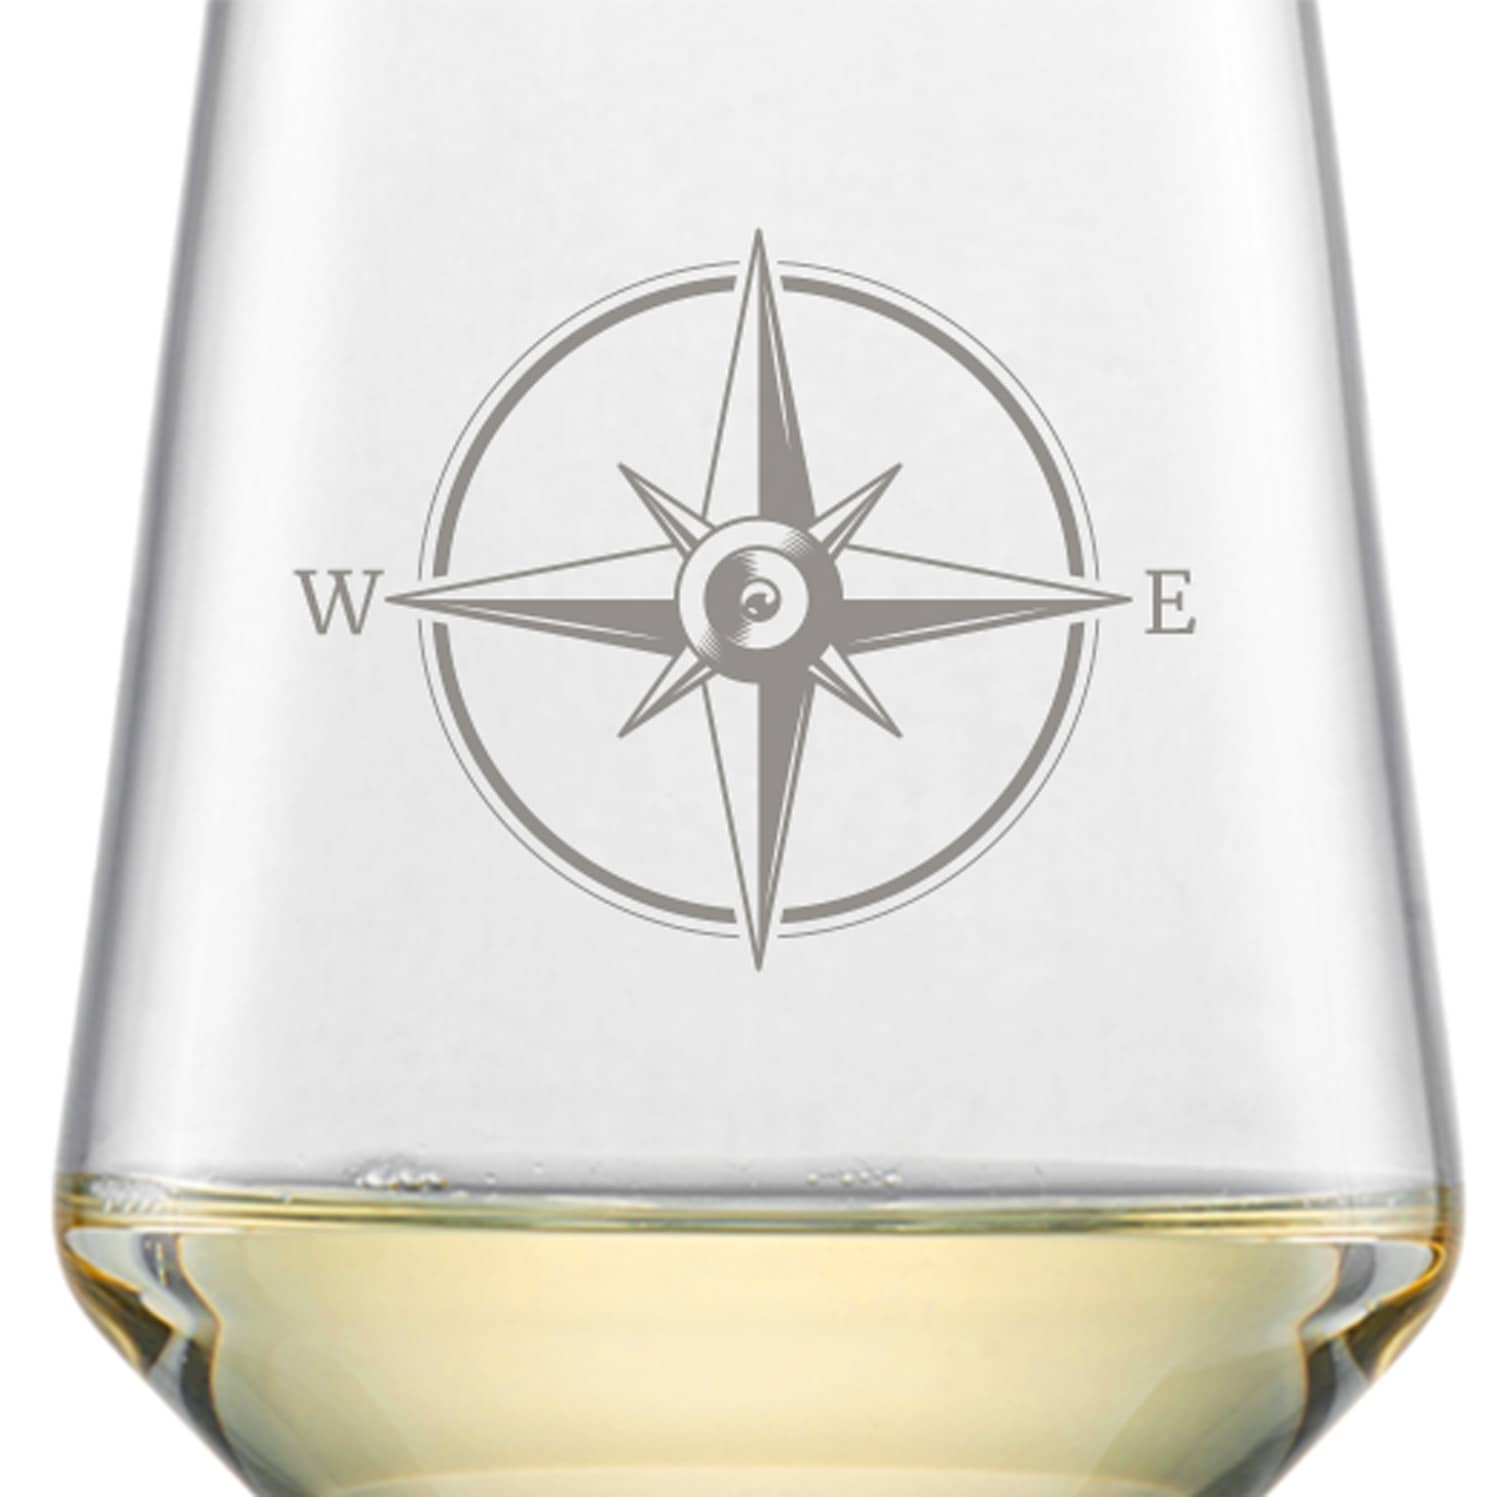 Schott Zwiesel Sauvignon Weißweinglas PURE mit Namen oder Wunschtext graviert (Kompass)